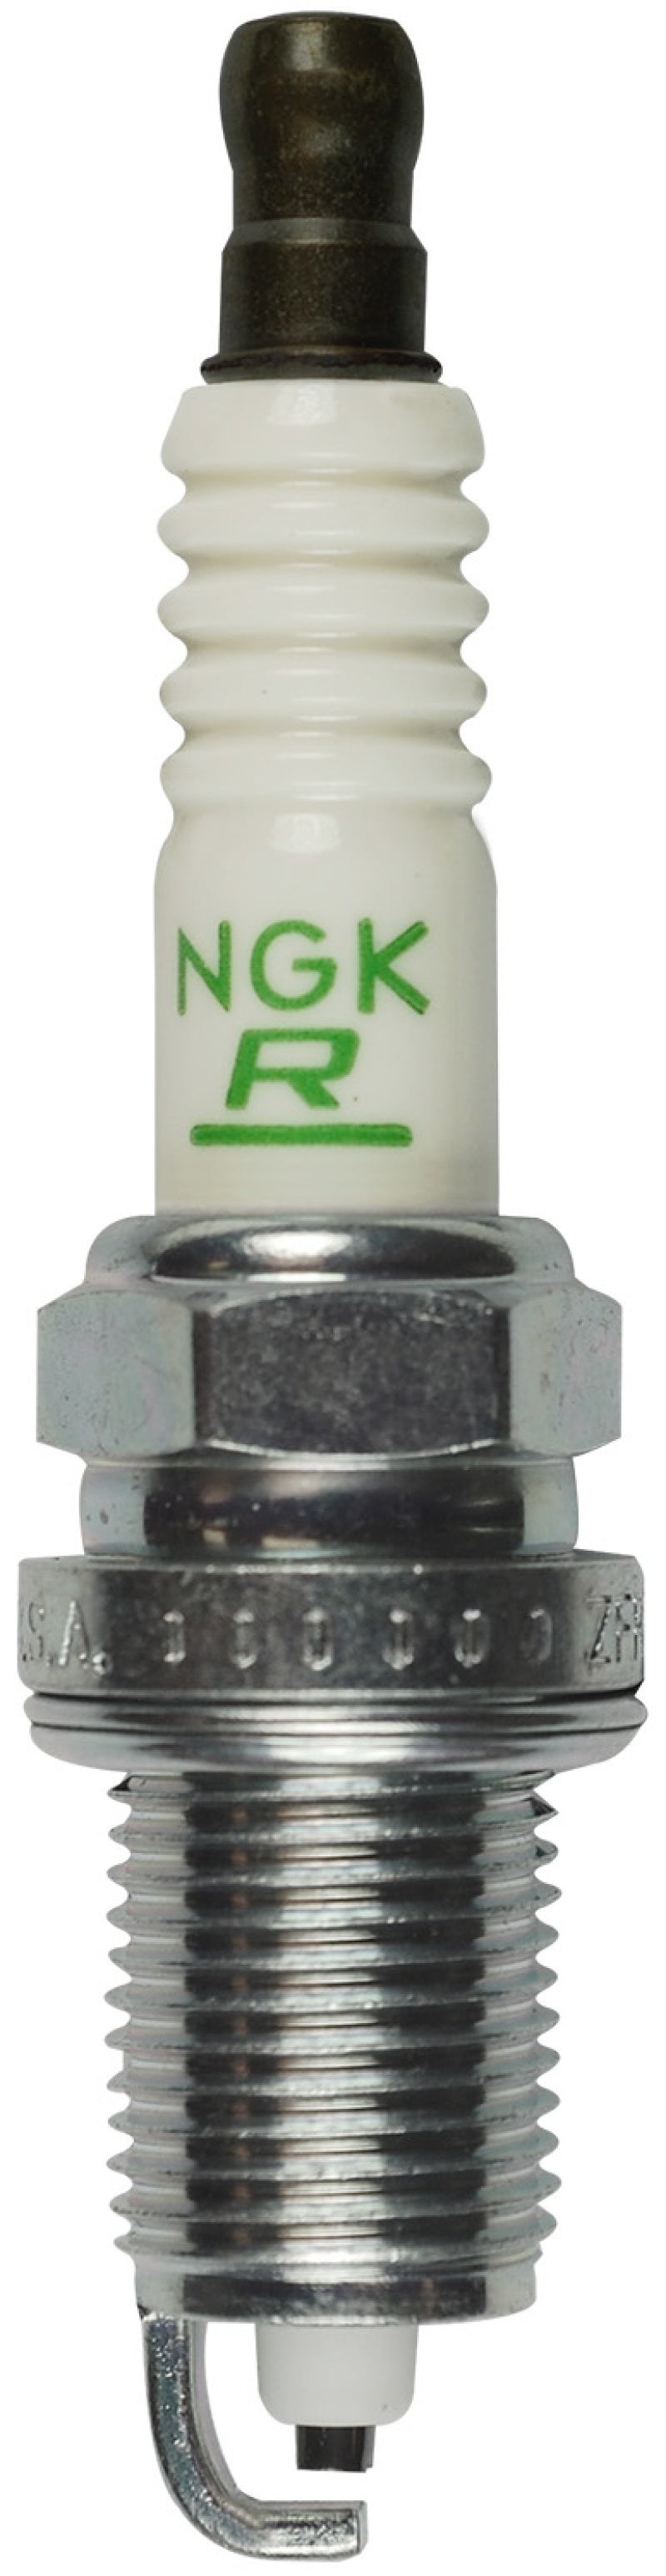 NGK V-Power Spark Plug Box of 4 (ZFR6F-11).